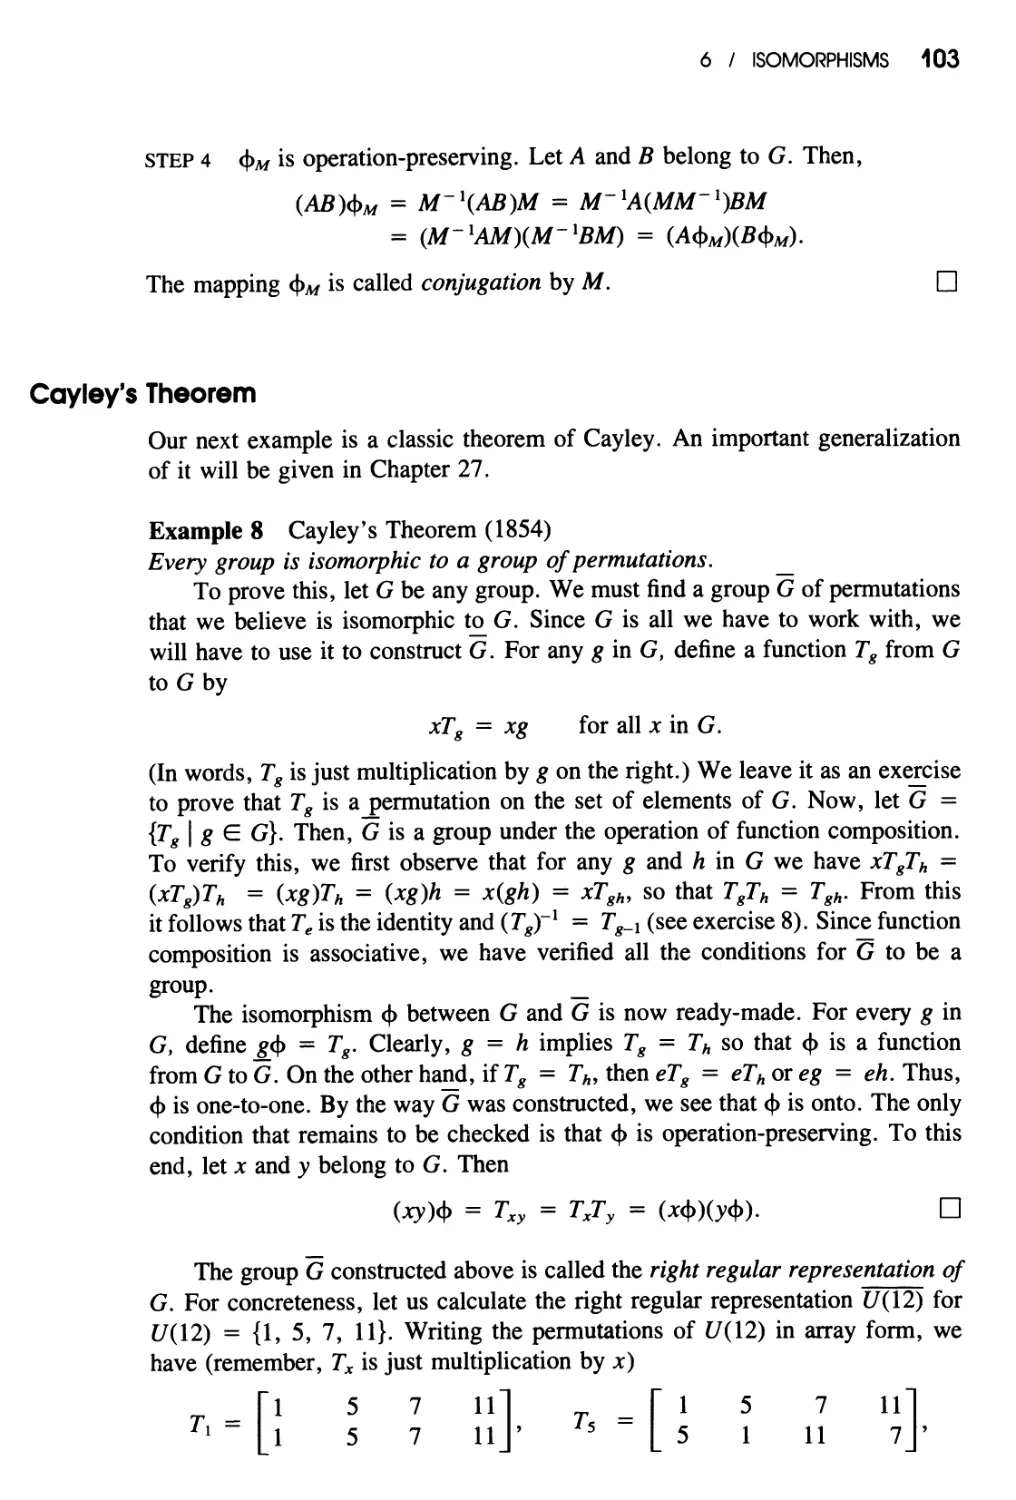 Cayley's Theorem